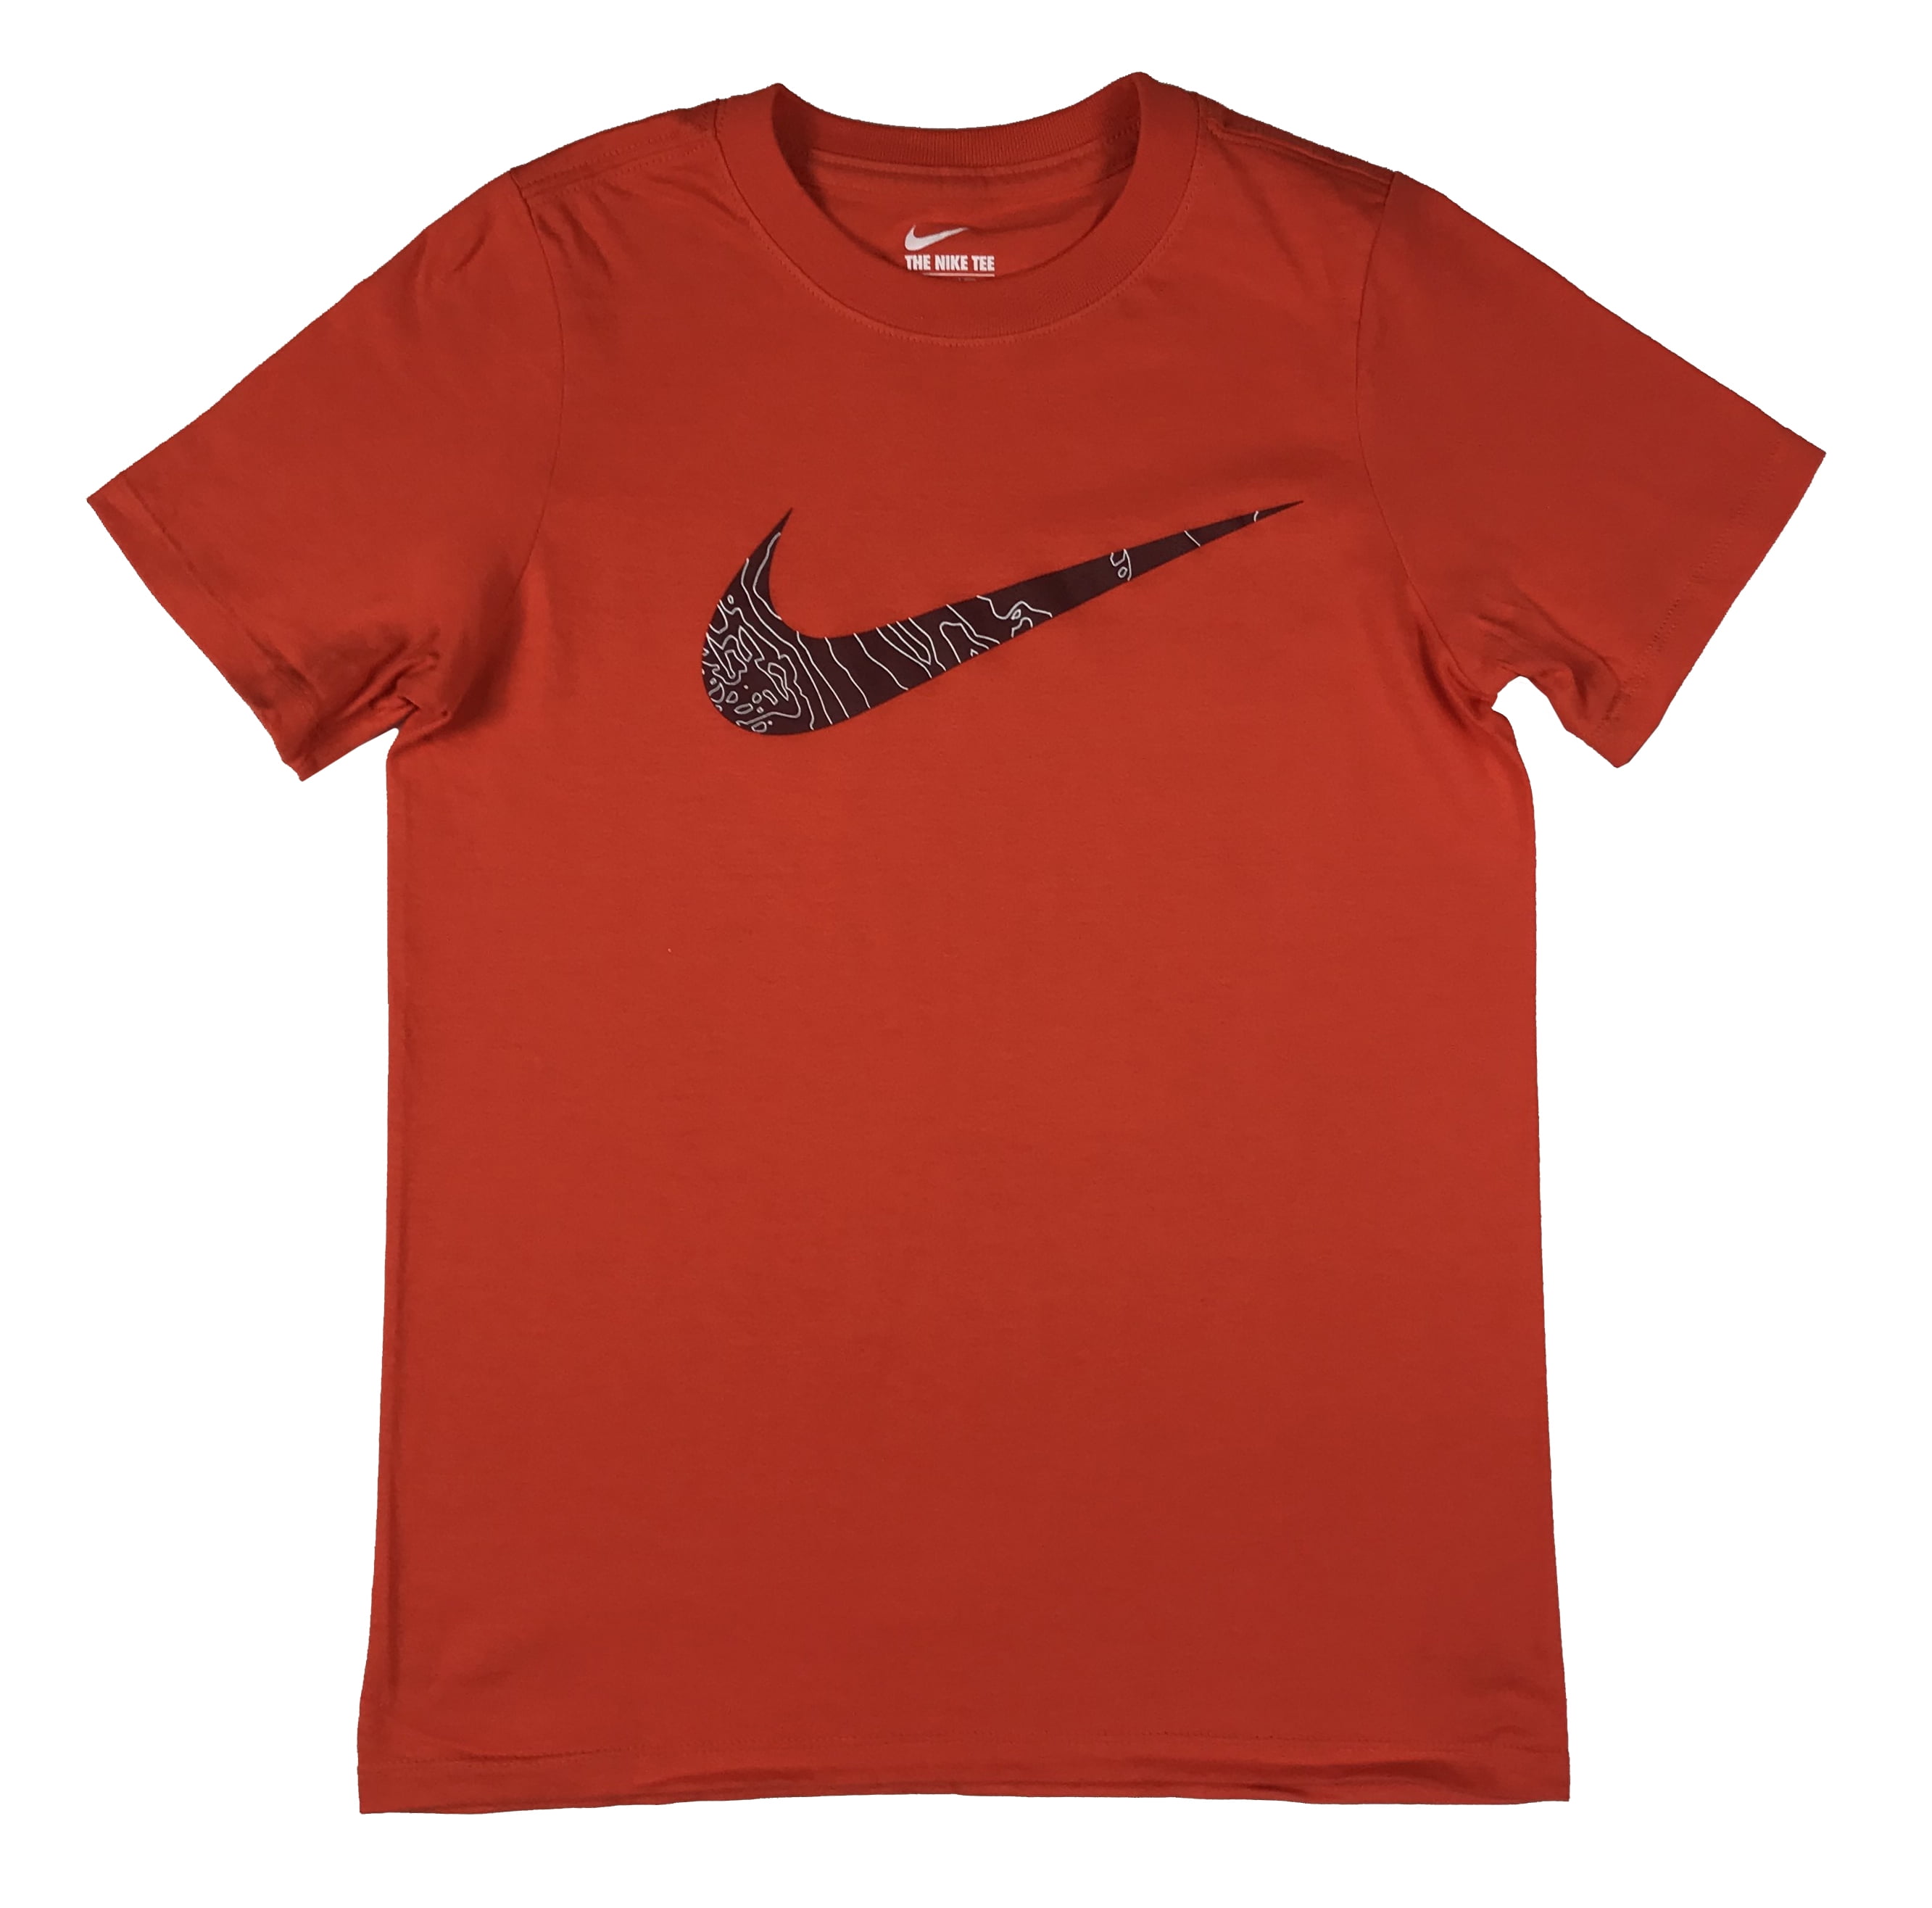 Nike - Nike Boys Big Swoosh Topography Graphic Cotton Shirt Orange New ...